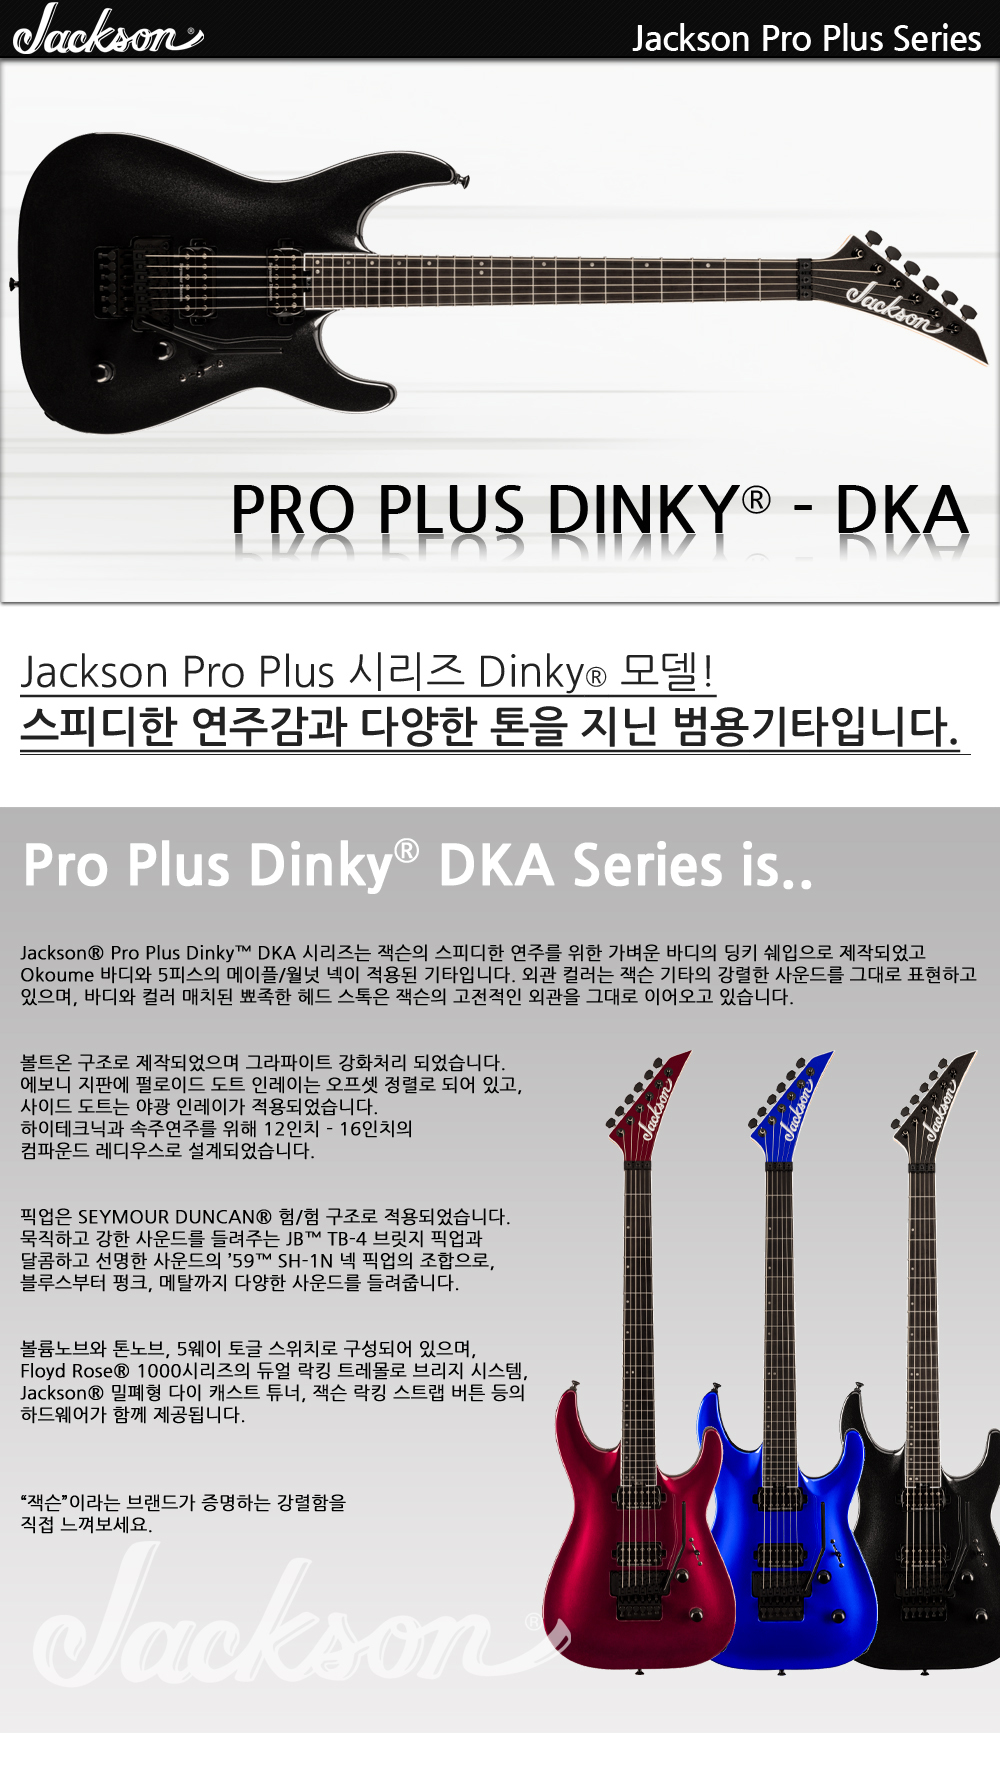 Jackson-ProPlus-Dinky-DKA-MetallicBlack_1_130816.jpg